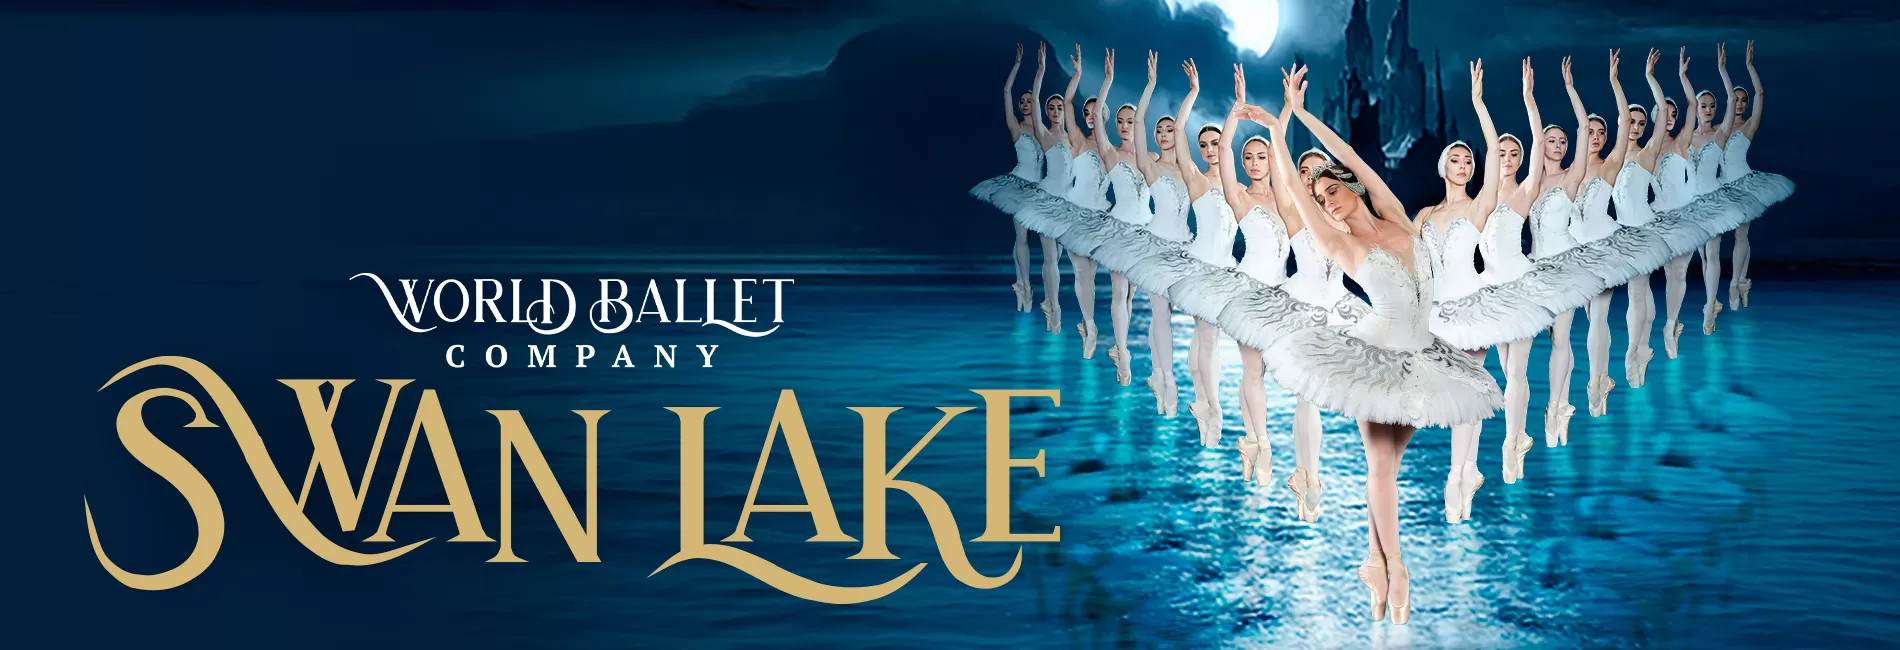 World Ballet Company - Swan Lake